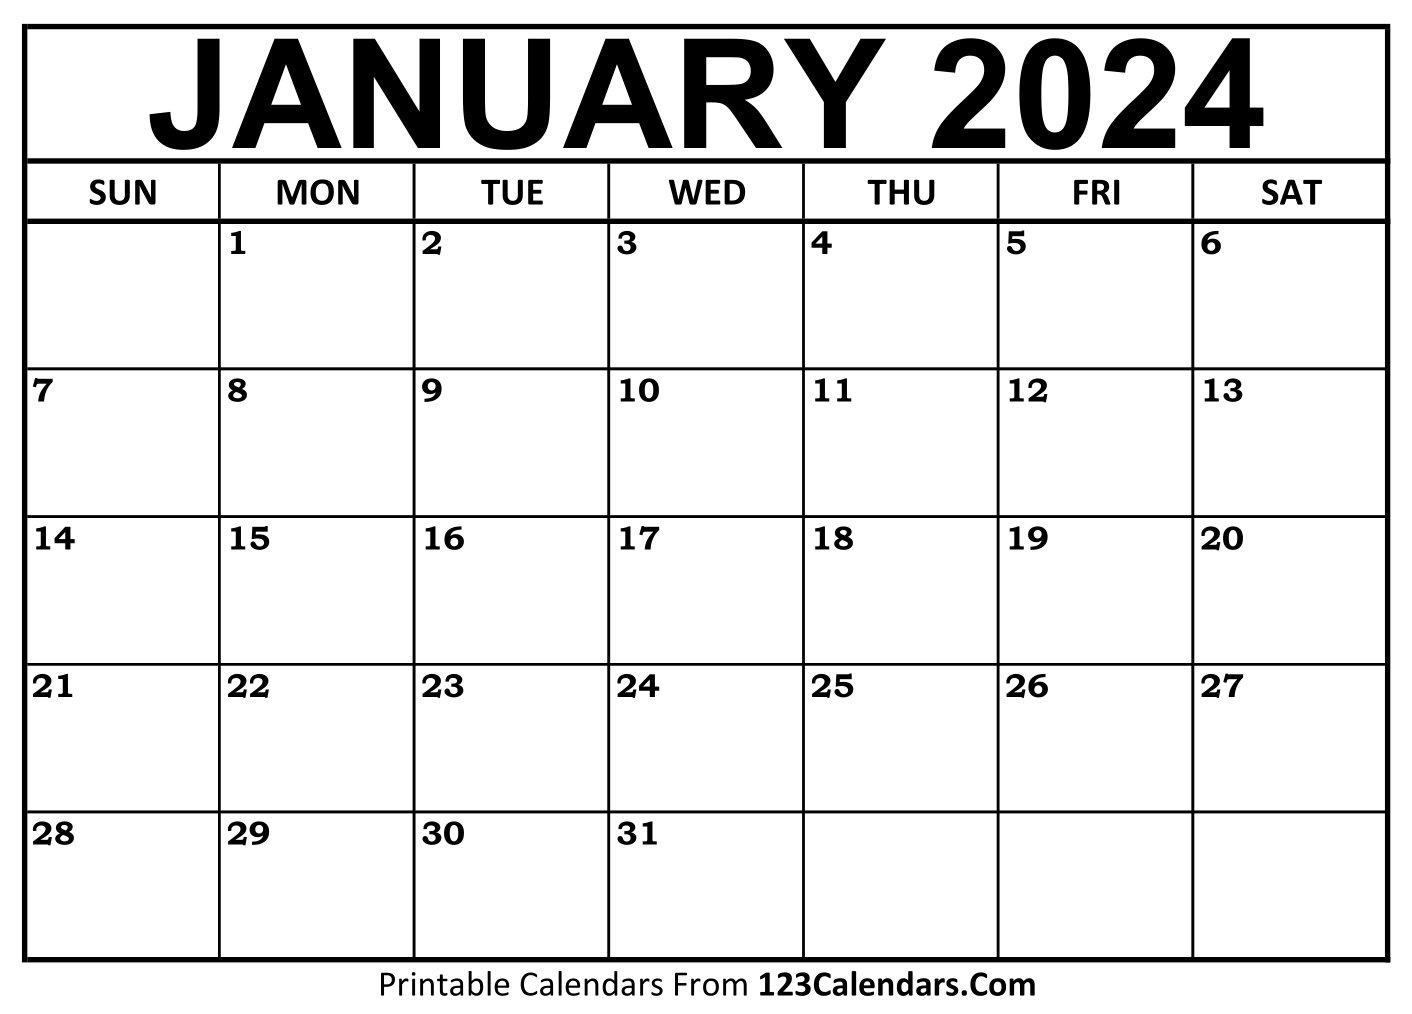 Printable January 2024 Calendar Templates - 123Calendars | Printable Calendar 2024 January